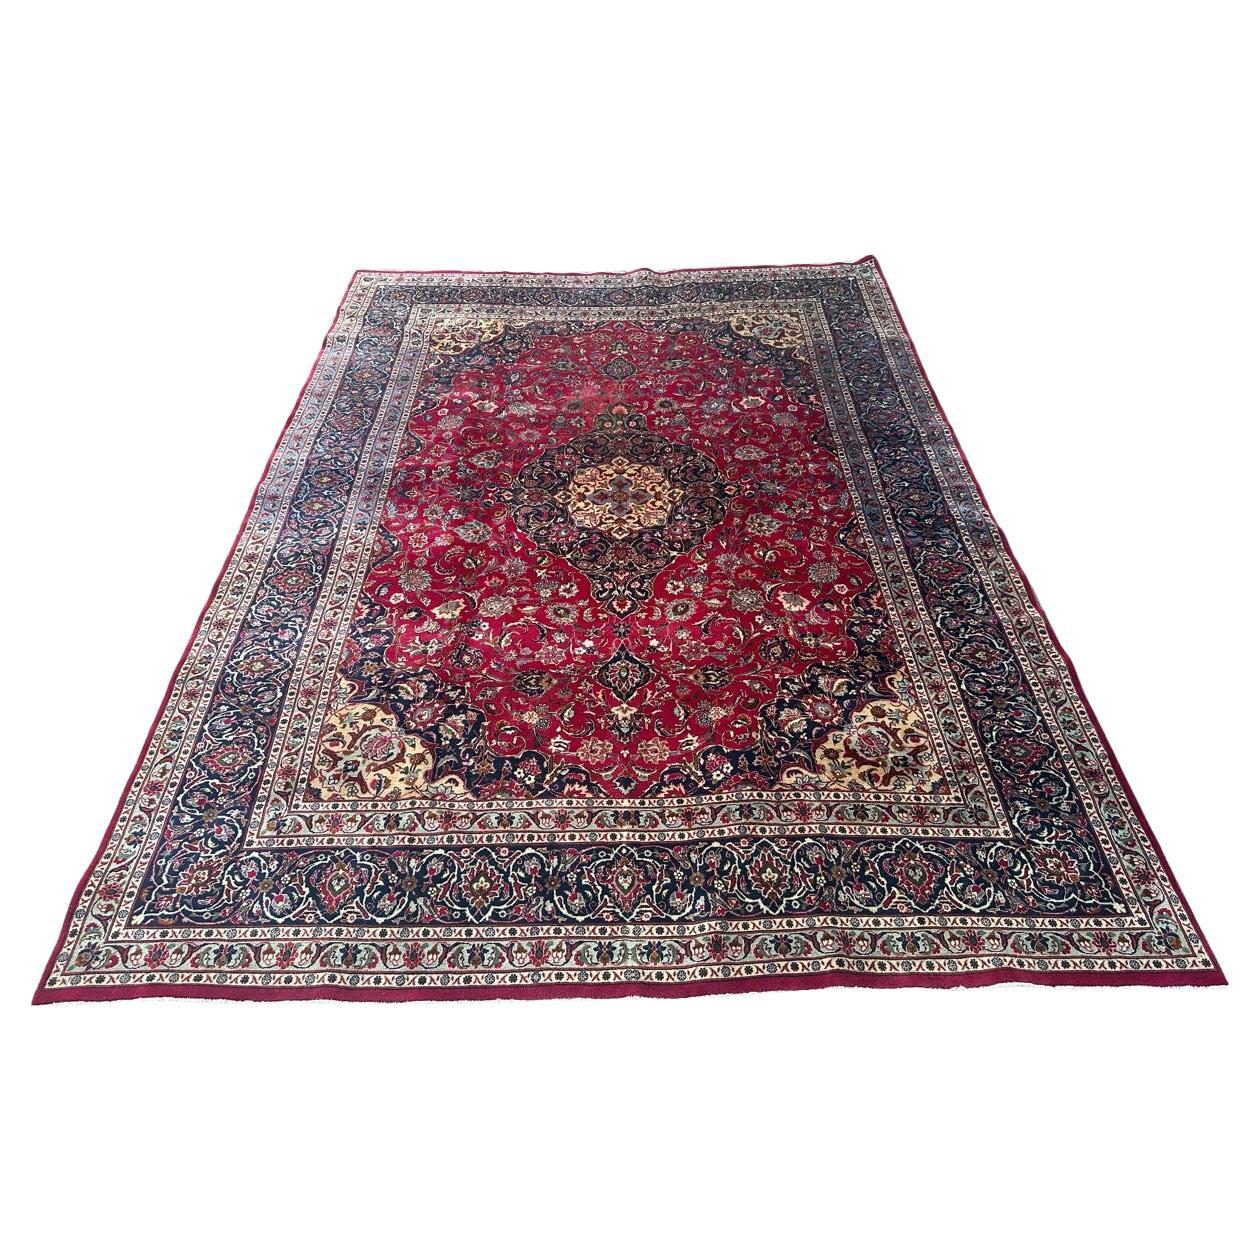 Bobyrug’s nice vintage large kashan rug